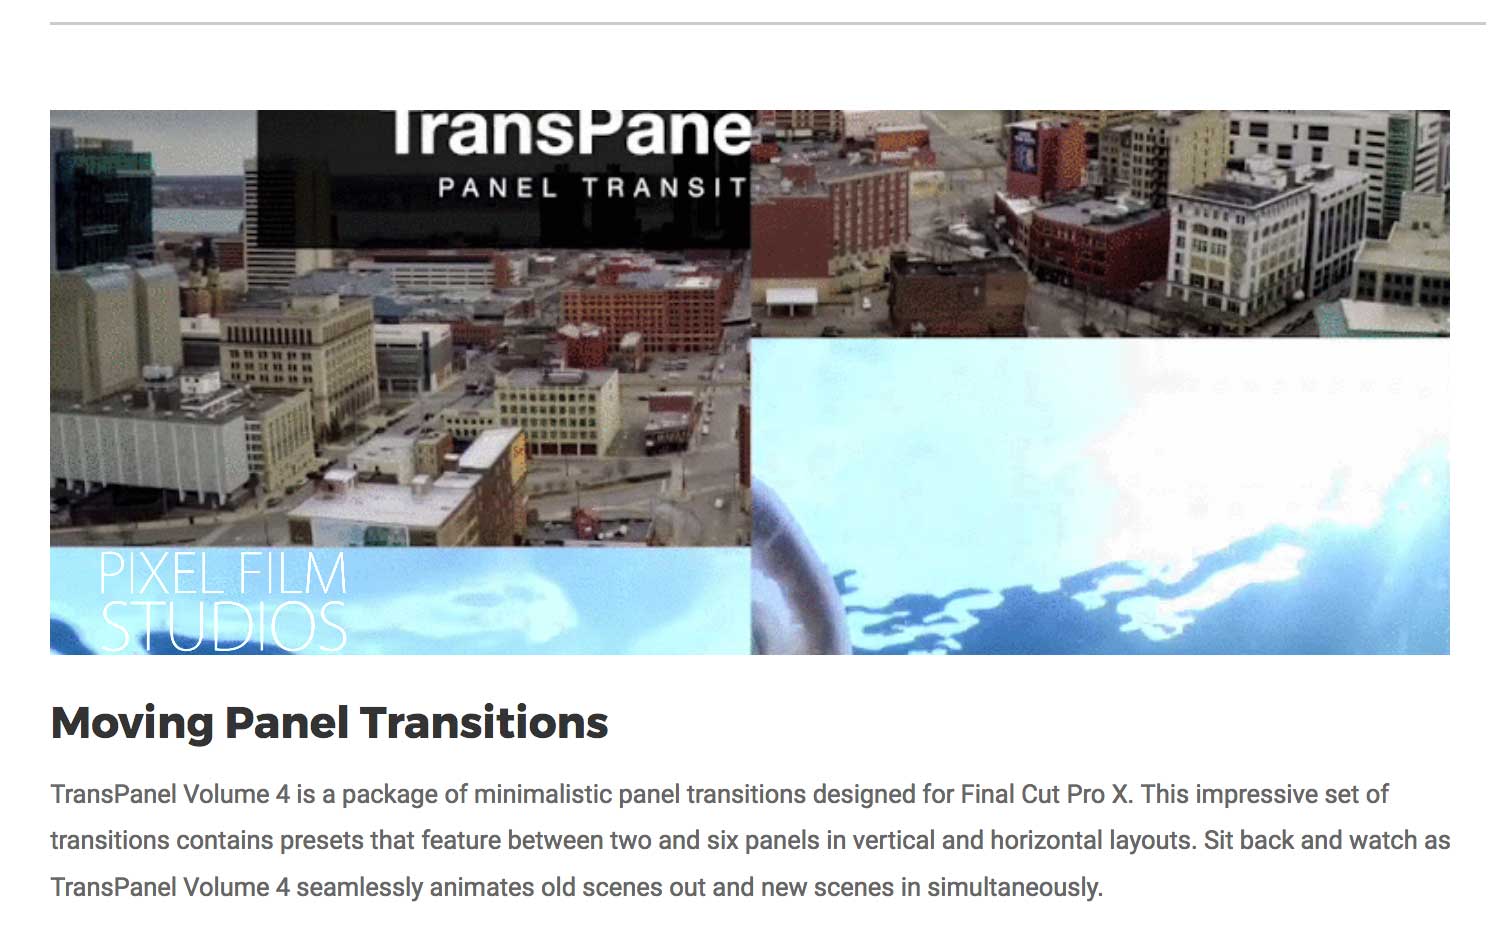 TransPanel Volume 4 - Pixel Film Studios Effects - Final Cut Pro X Plugins